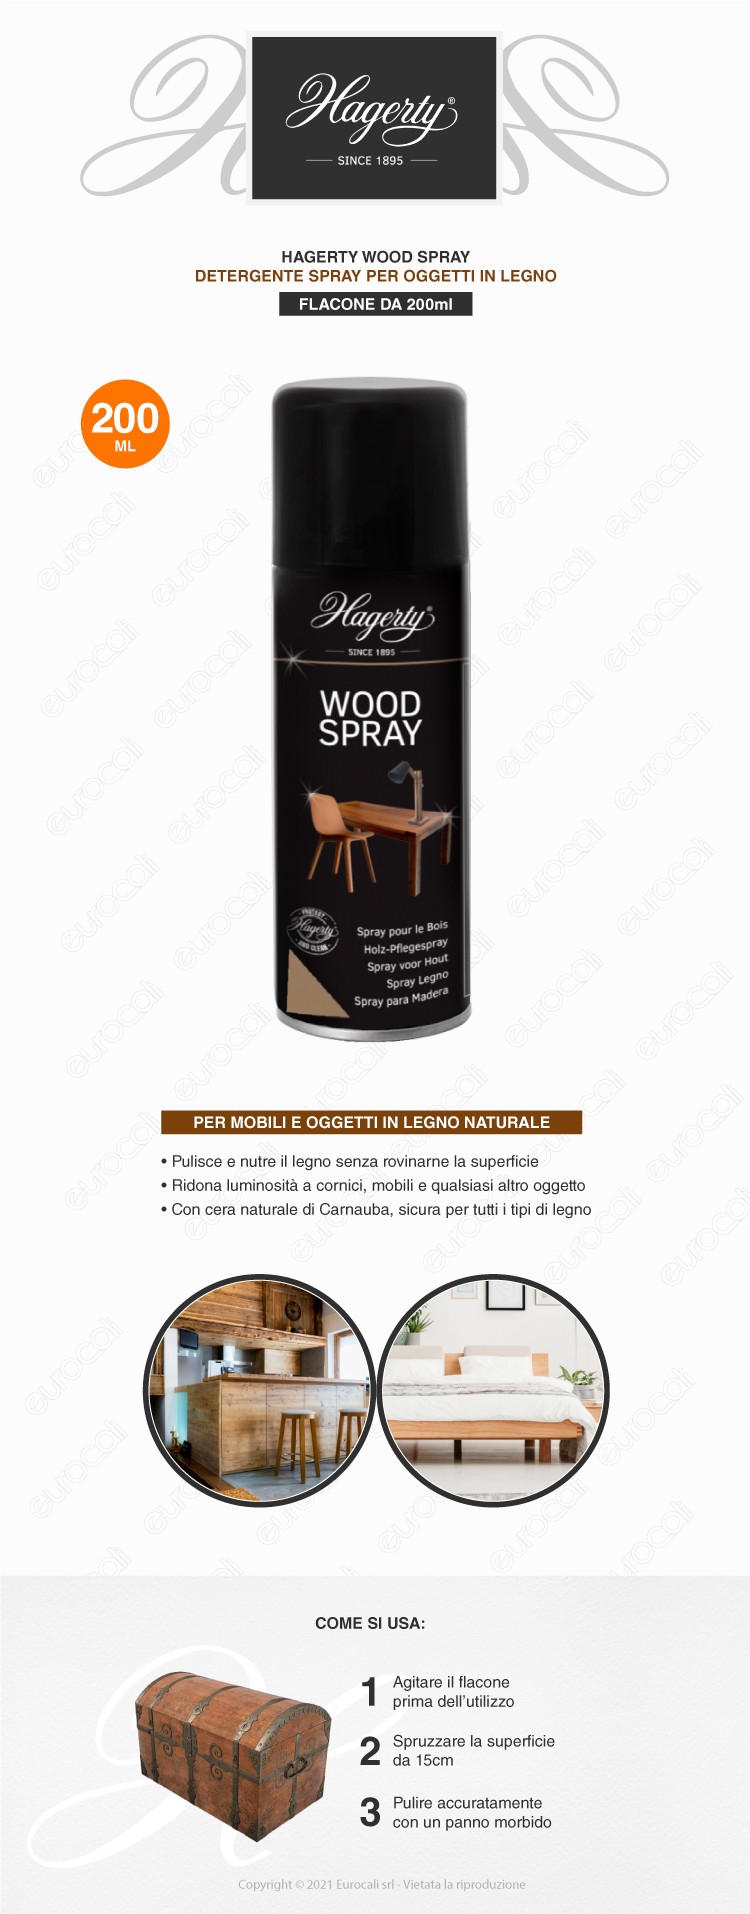 hagerty wood spray pulitore legno 200ml